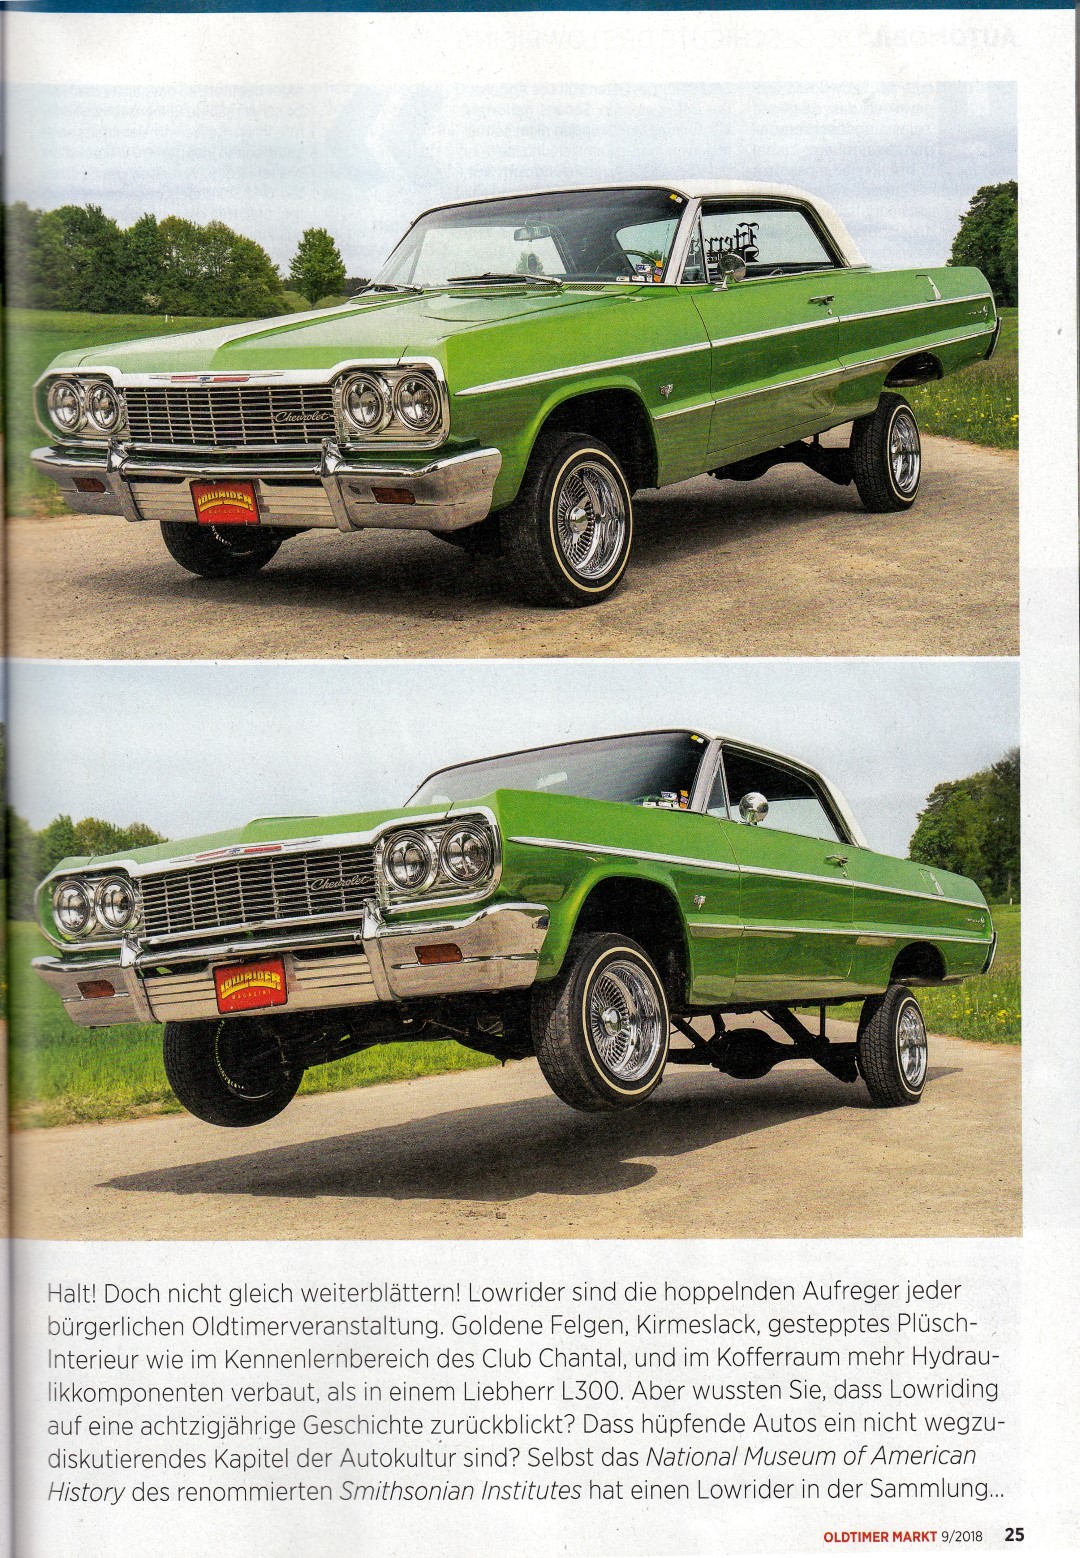 Impala 64 Lowrider Blog Von Christian Pogea